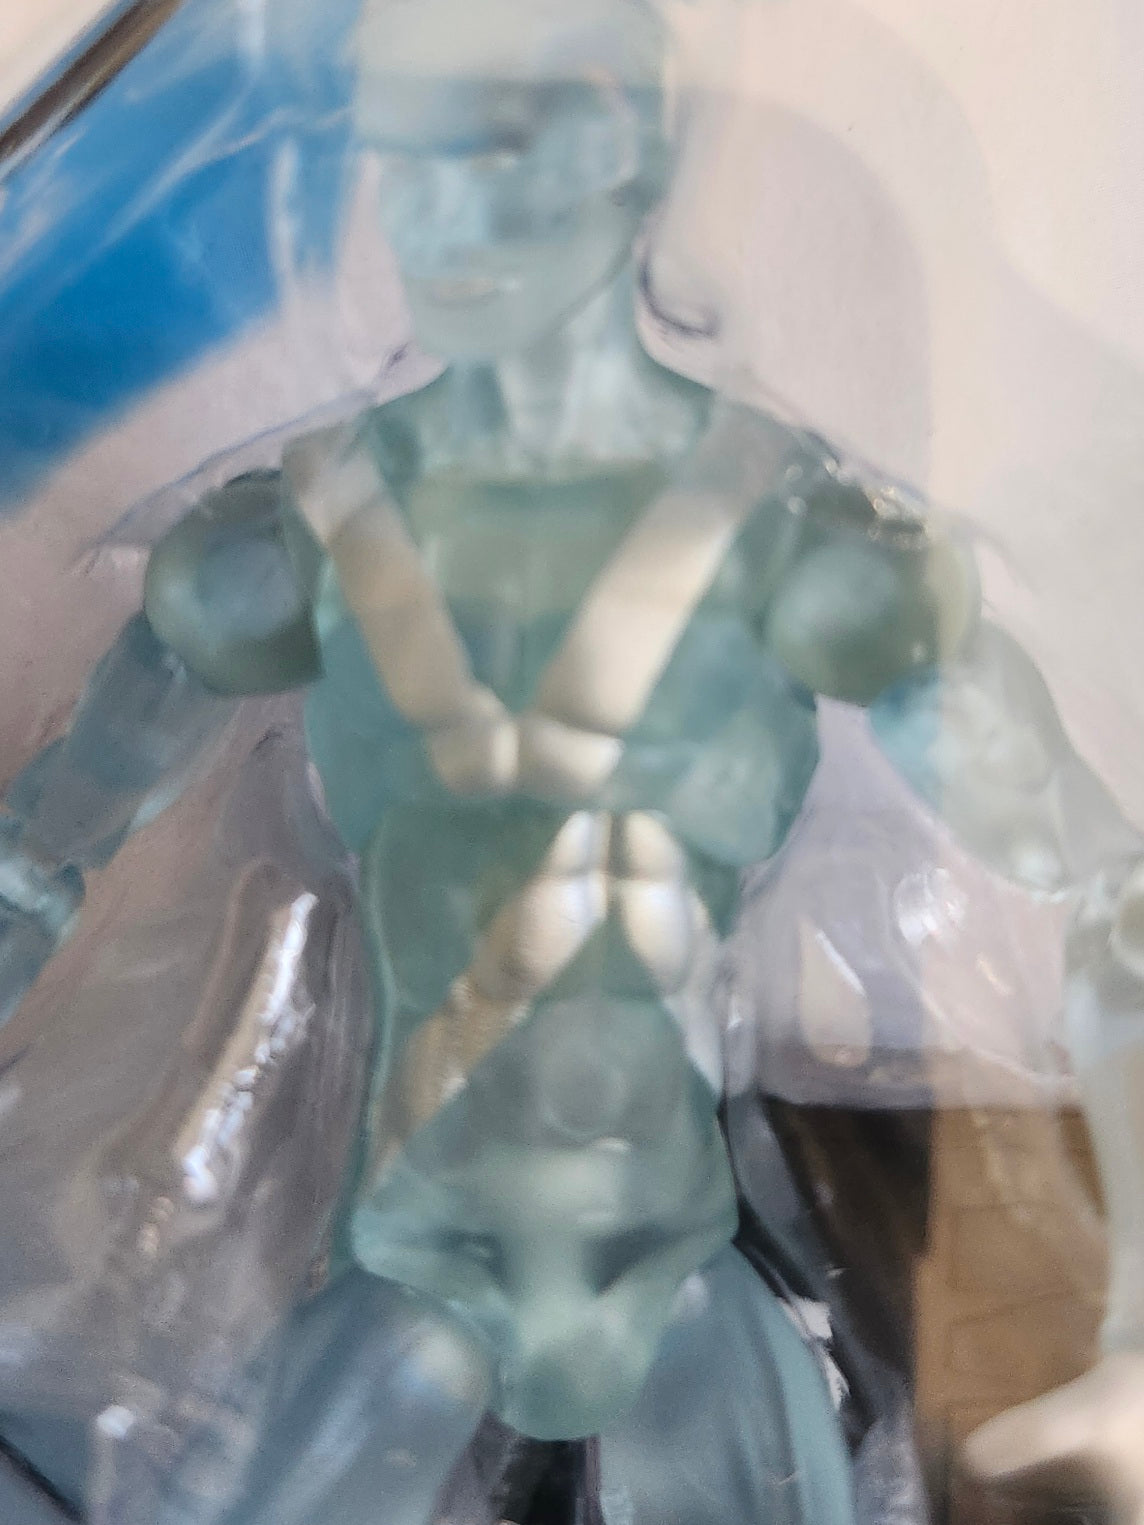 Marvel Universe Series 3 Figure 23 Iceman 3.75-Inch Action Figure